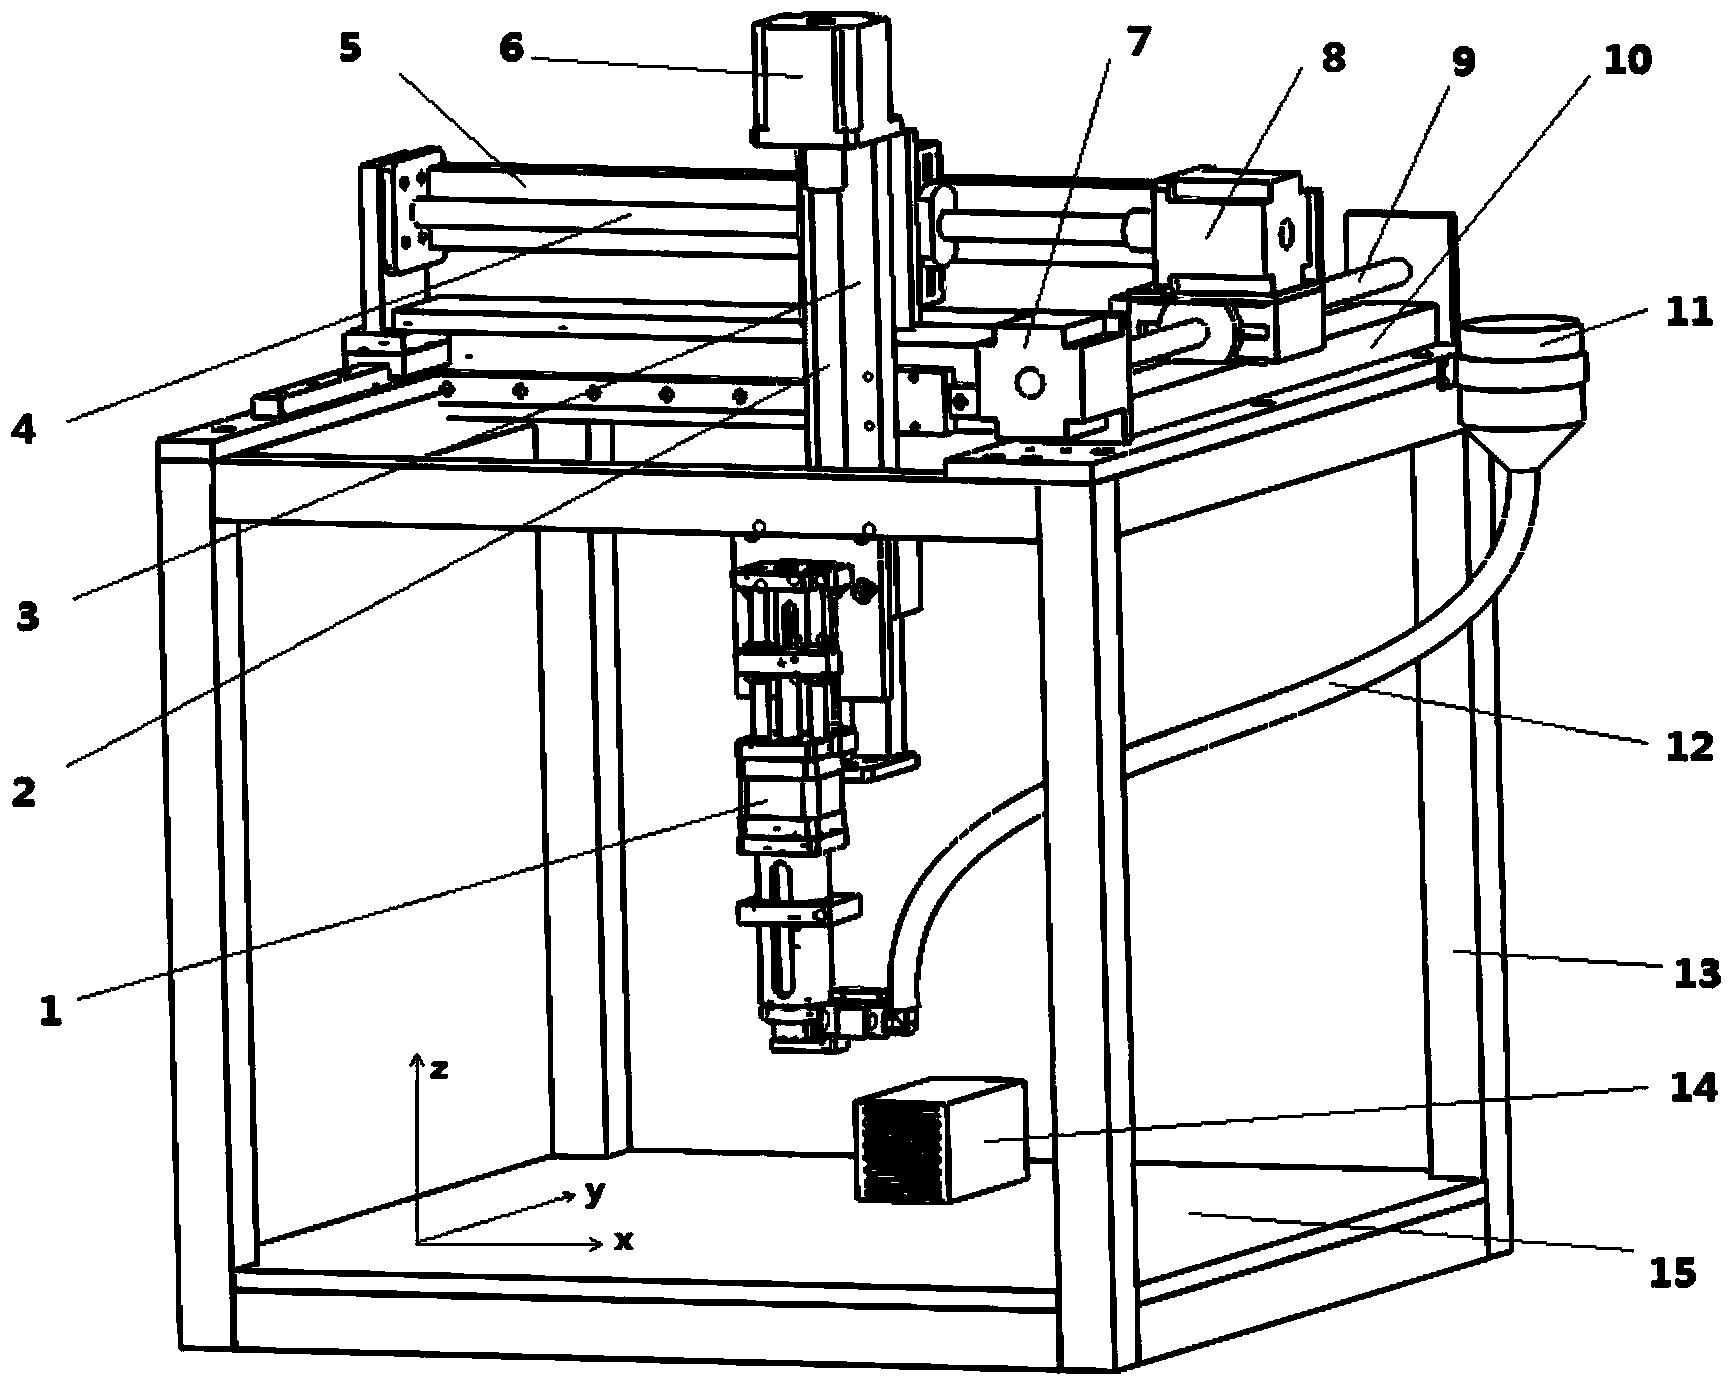 Three-dimensional printer for printing liquid materials